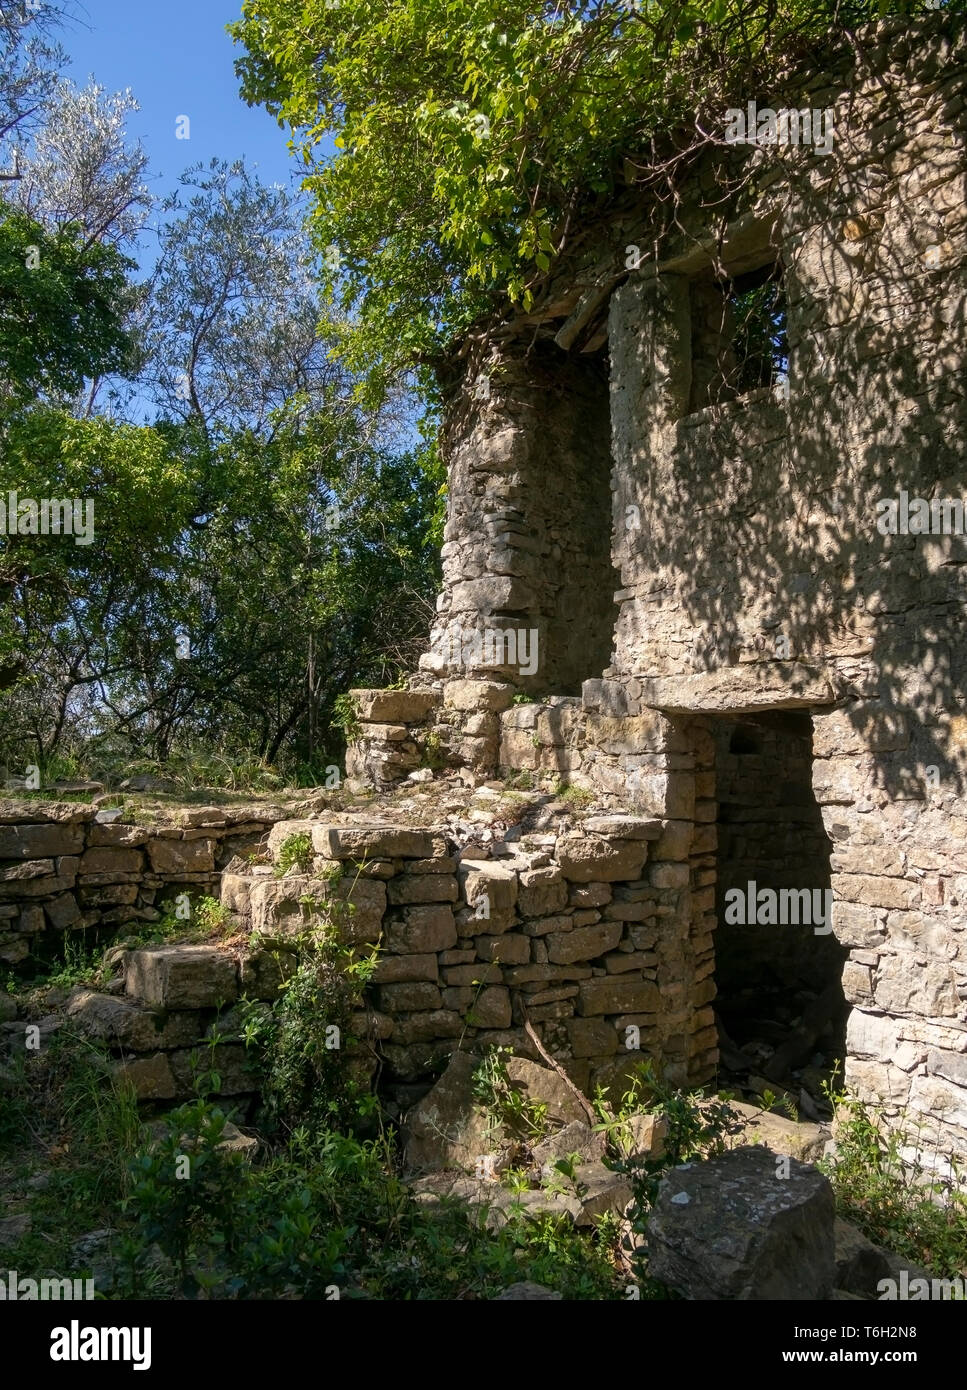 Barbazzano, ancient fortified ruins near Lerici, Italy. Stock Photo